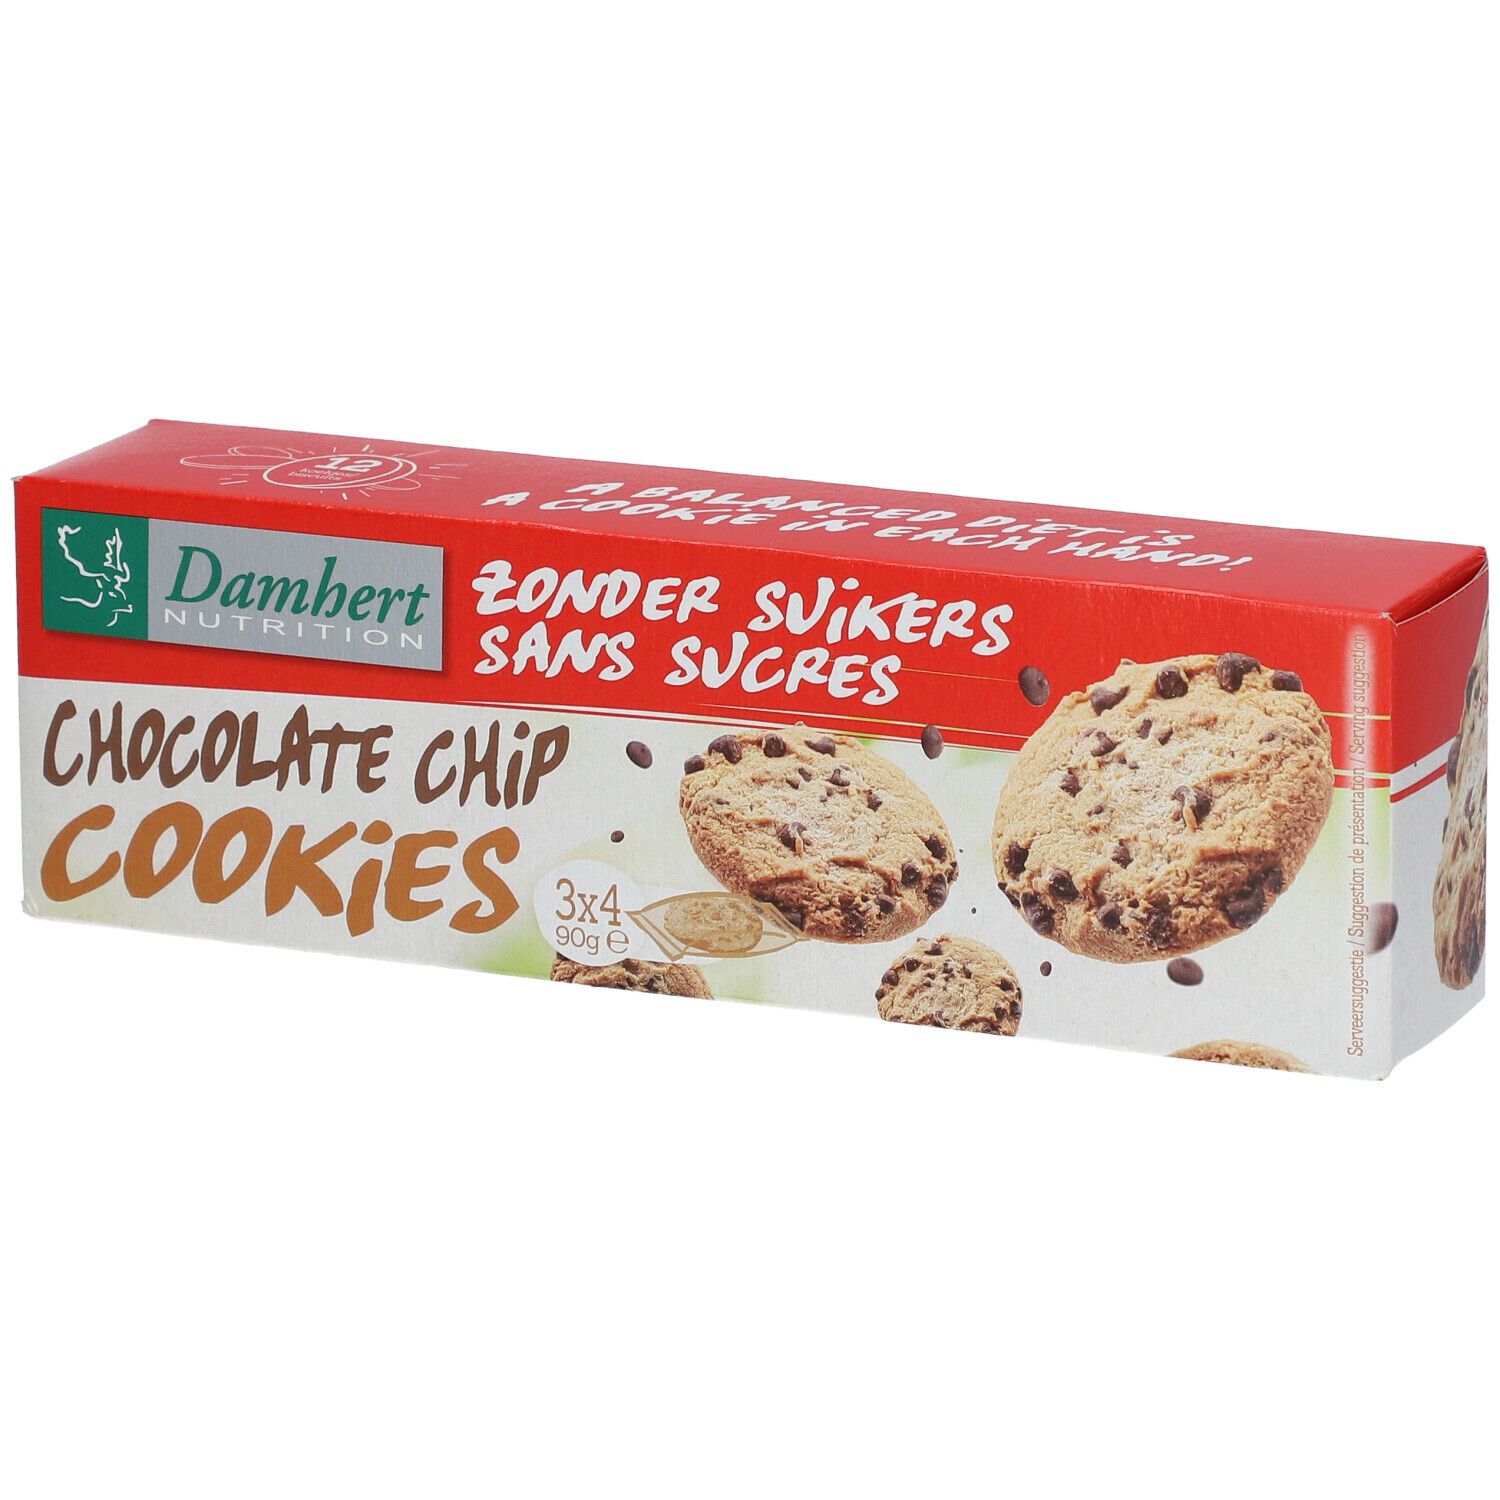 Damhert Sans sucres Chocolate chip cookies